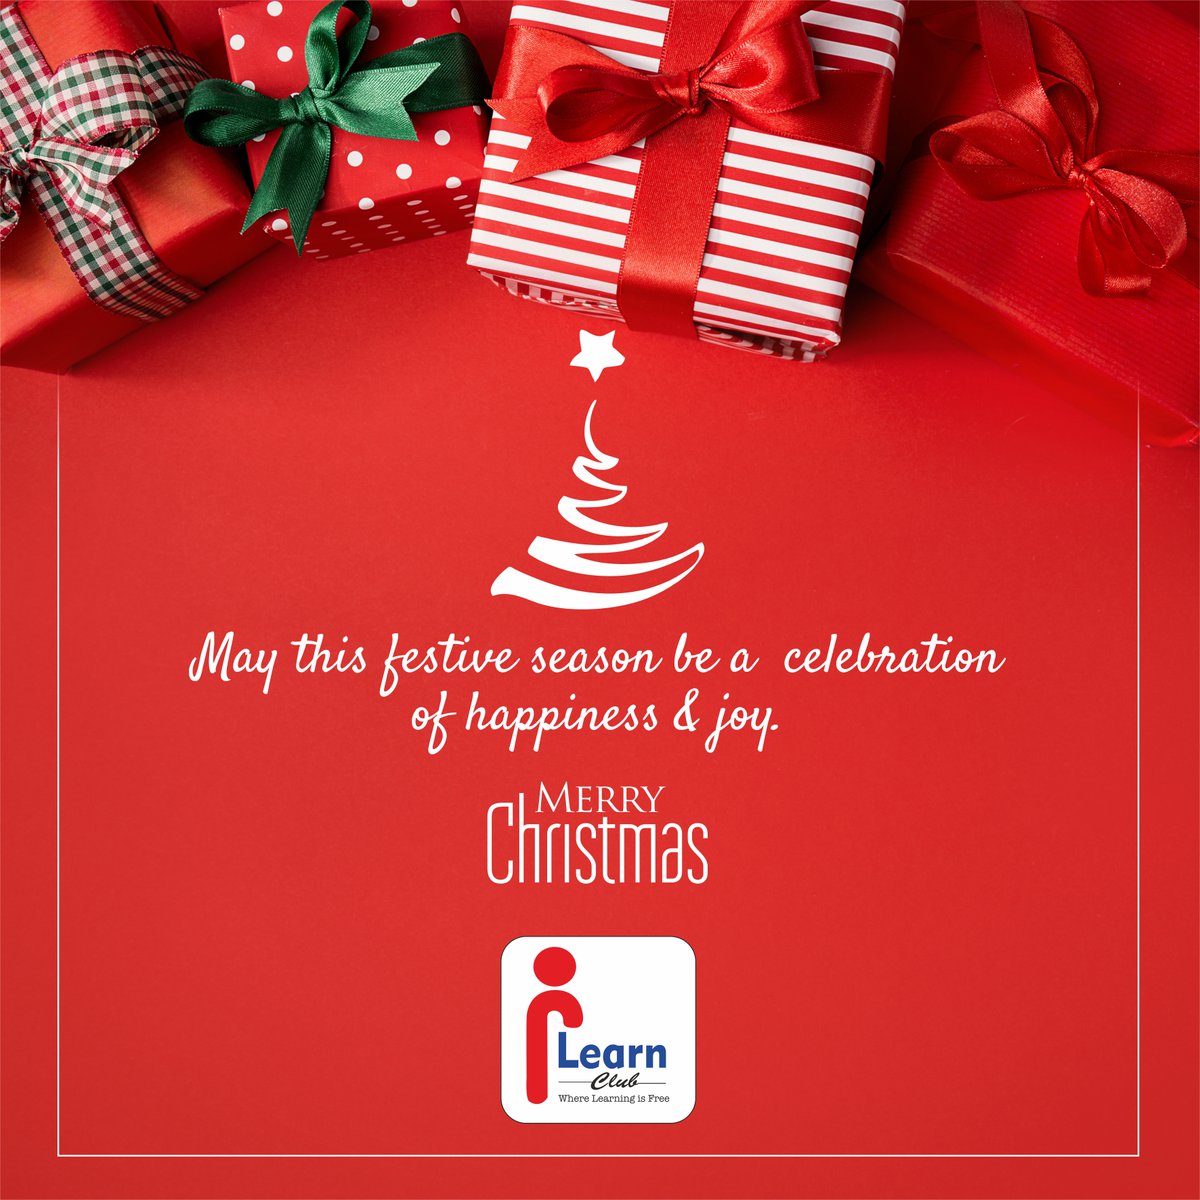 Have a Happy & Joyous Christmas! #MerryChristmas #Xmas #HappyHolidays #iLearn #WhereLearningisFree